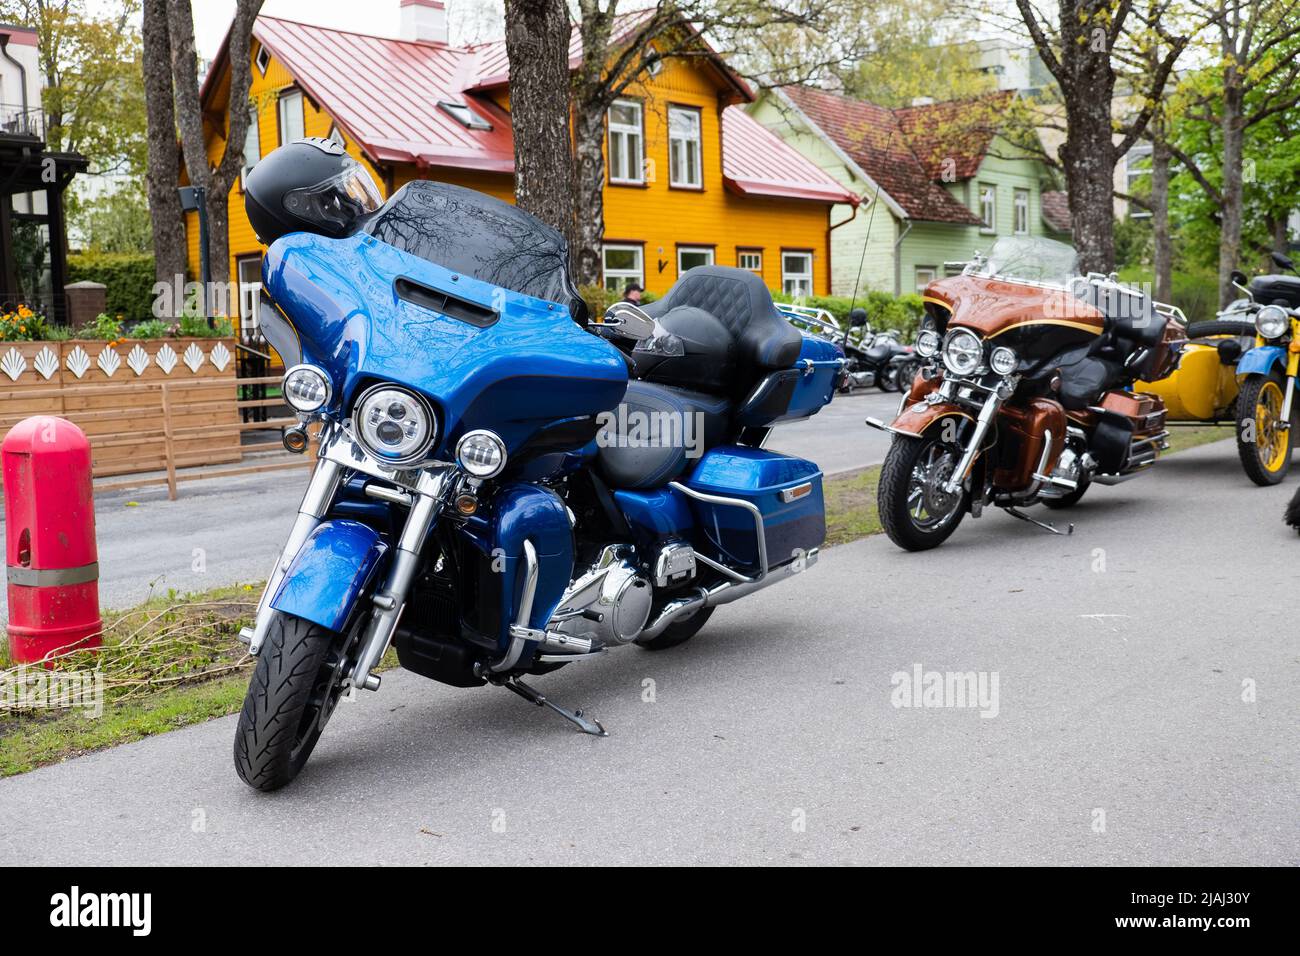 Estonian Motorcycle Season Opening. Motorcyclist gathering parade or rally. Stock Photo